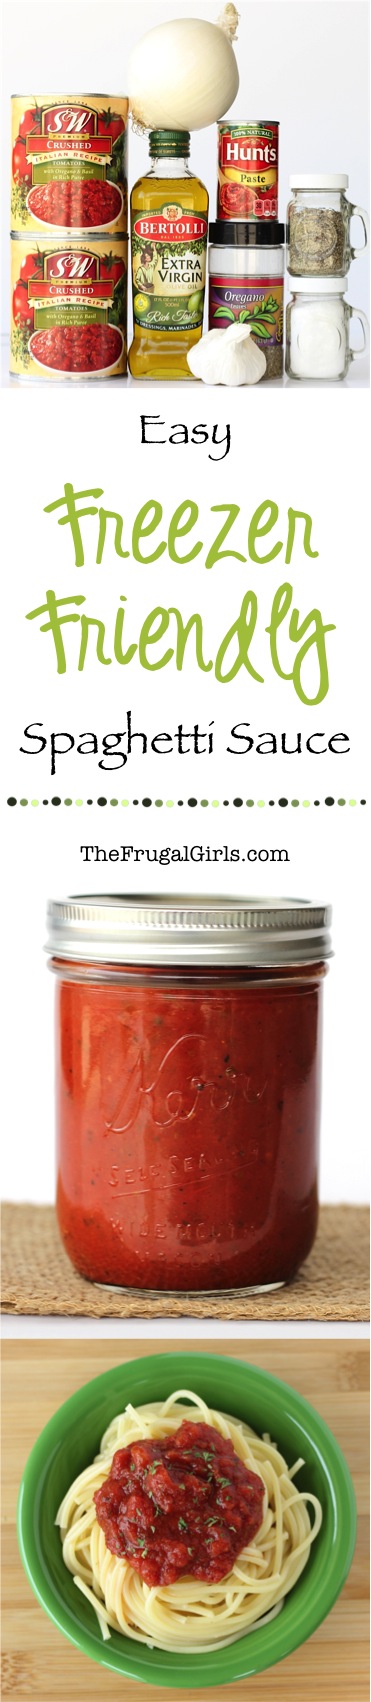 Easy Freezer Friendly Spaghetii Sauce Recipe from TheFrugalGirls.com